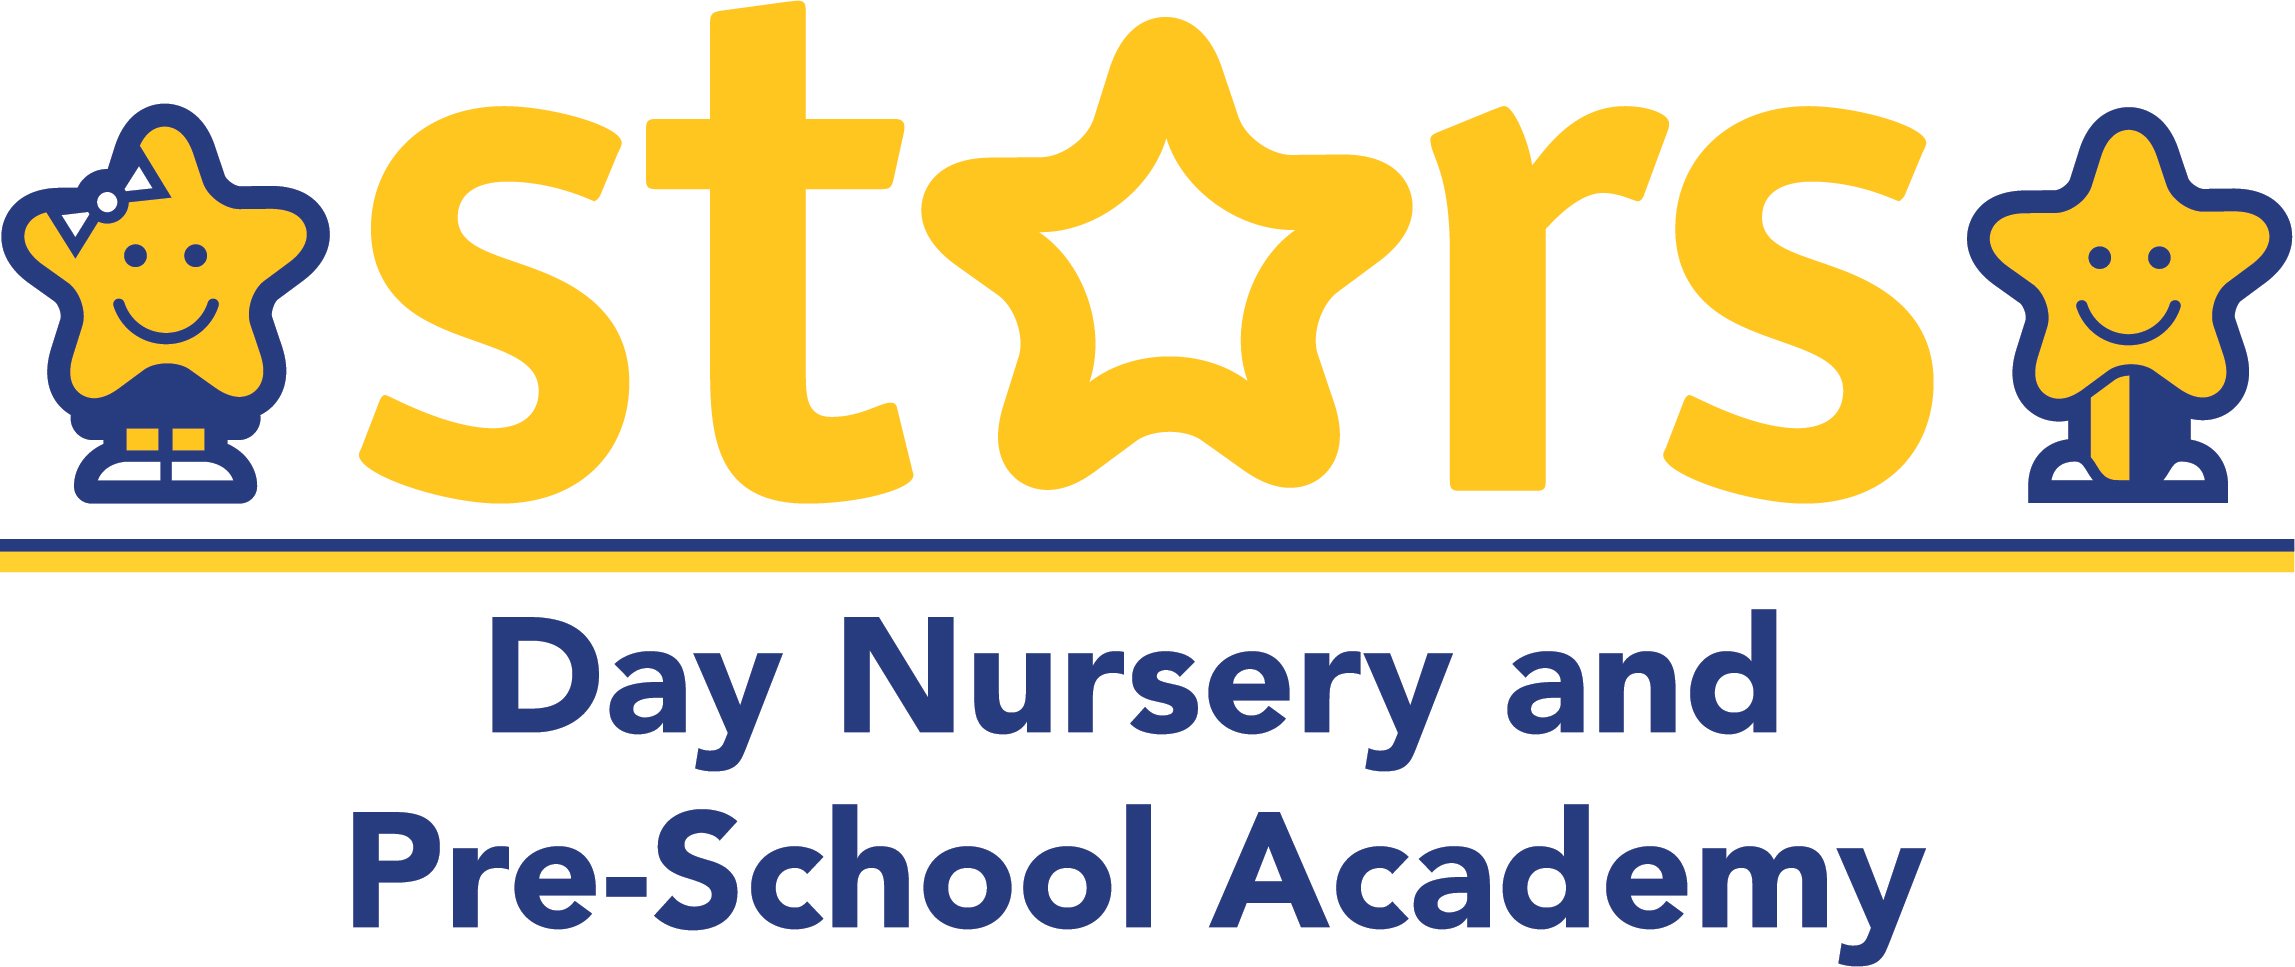 Stars Logo Day Nursery & Academy